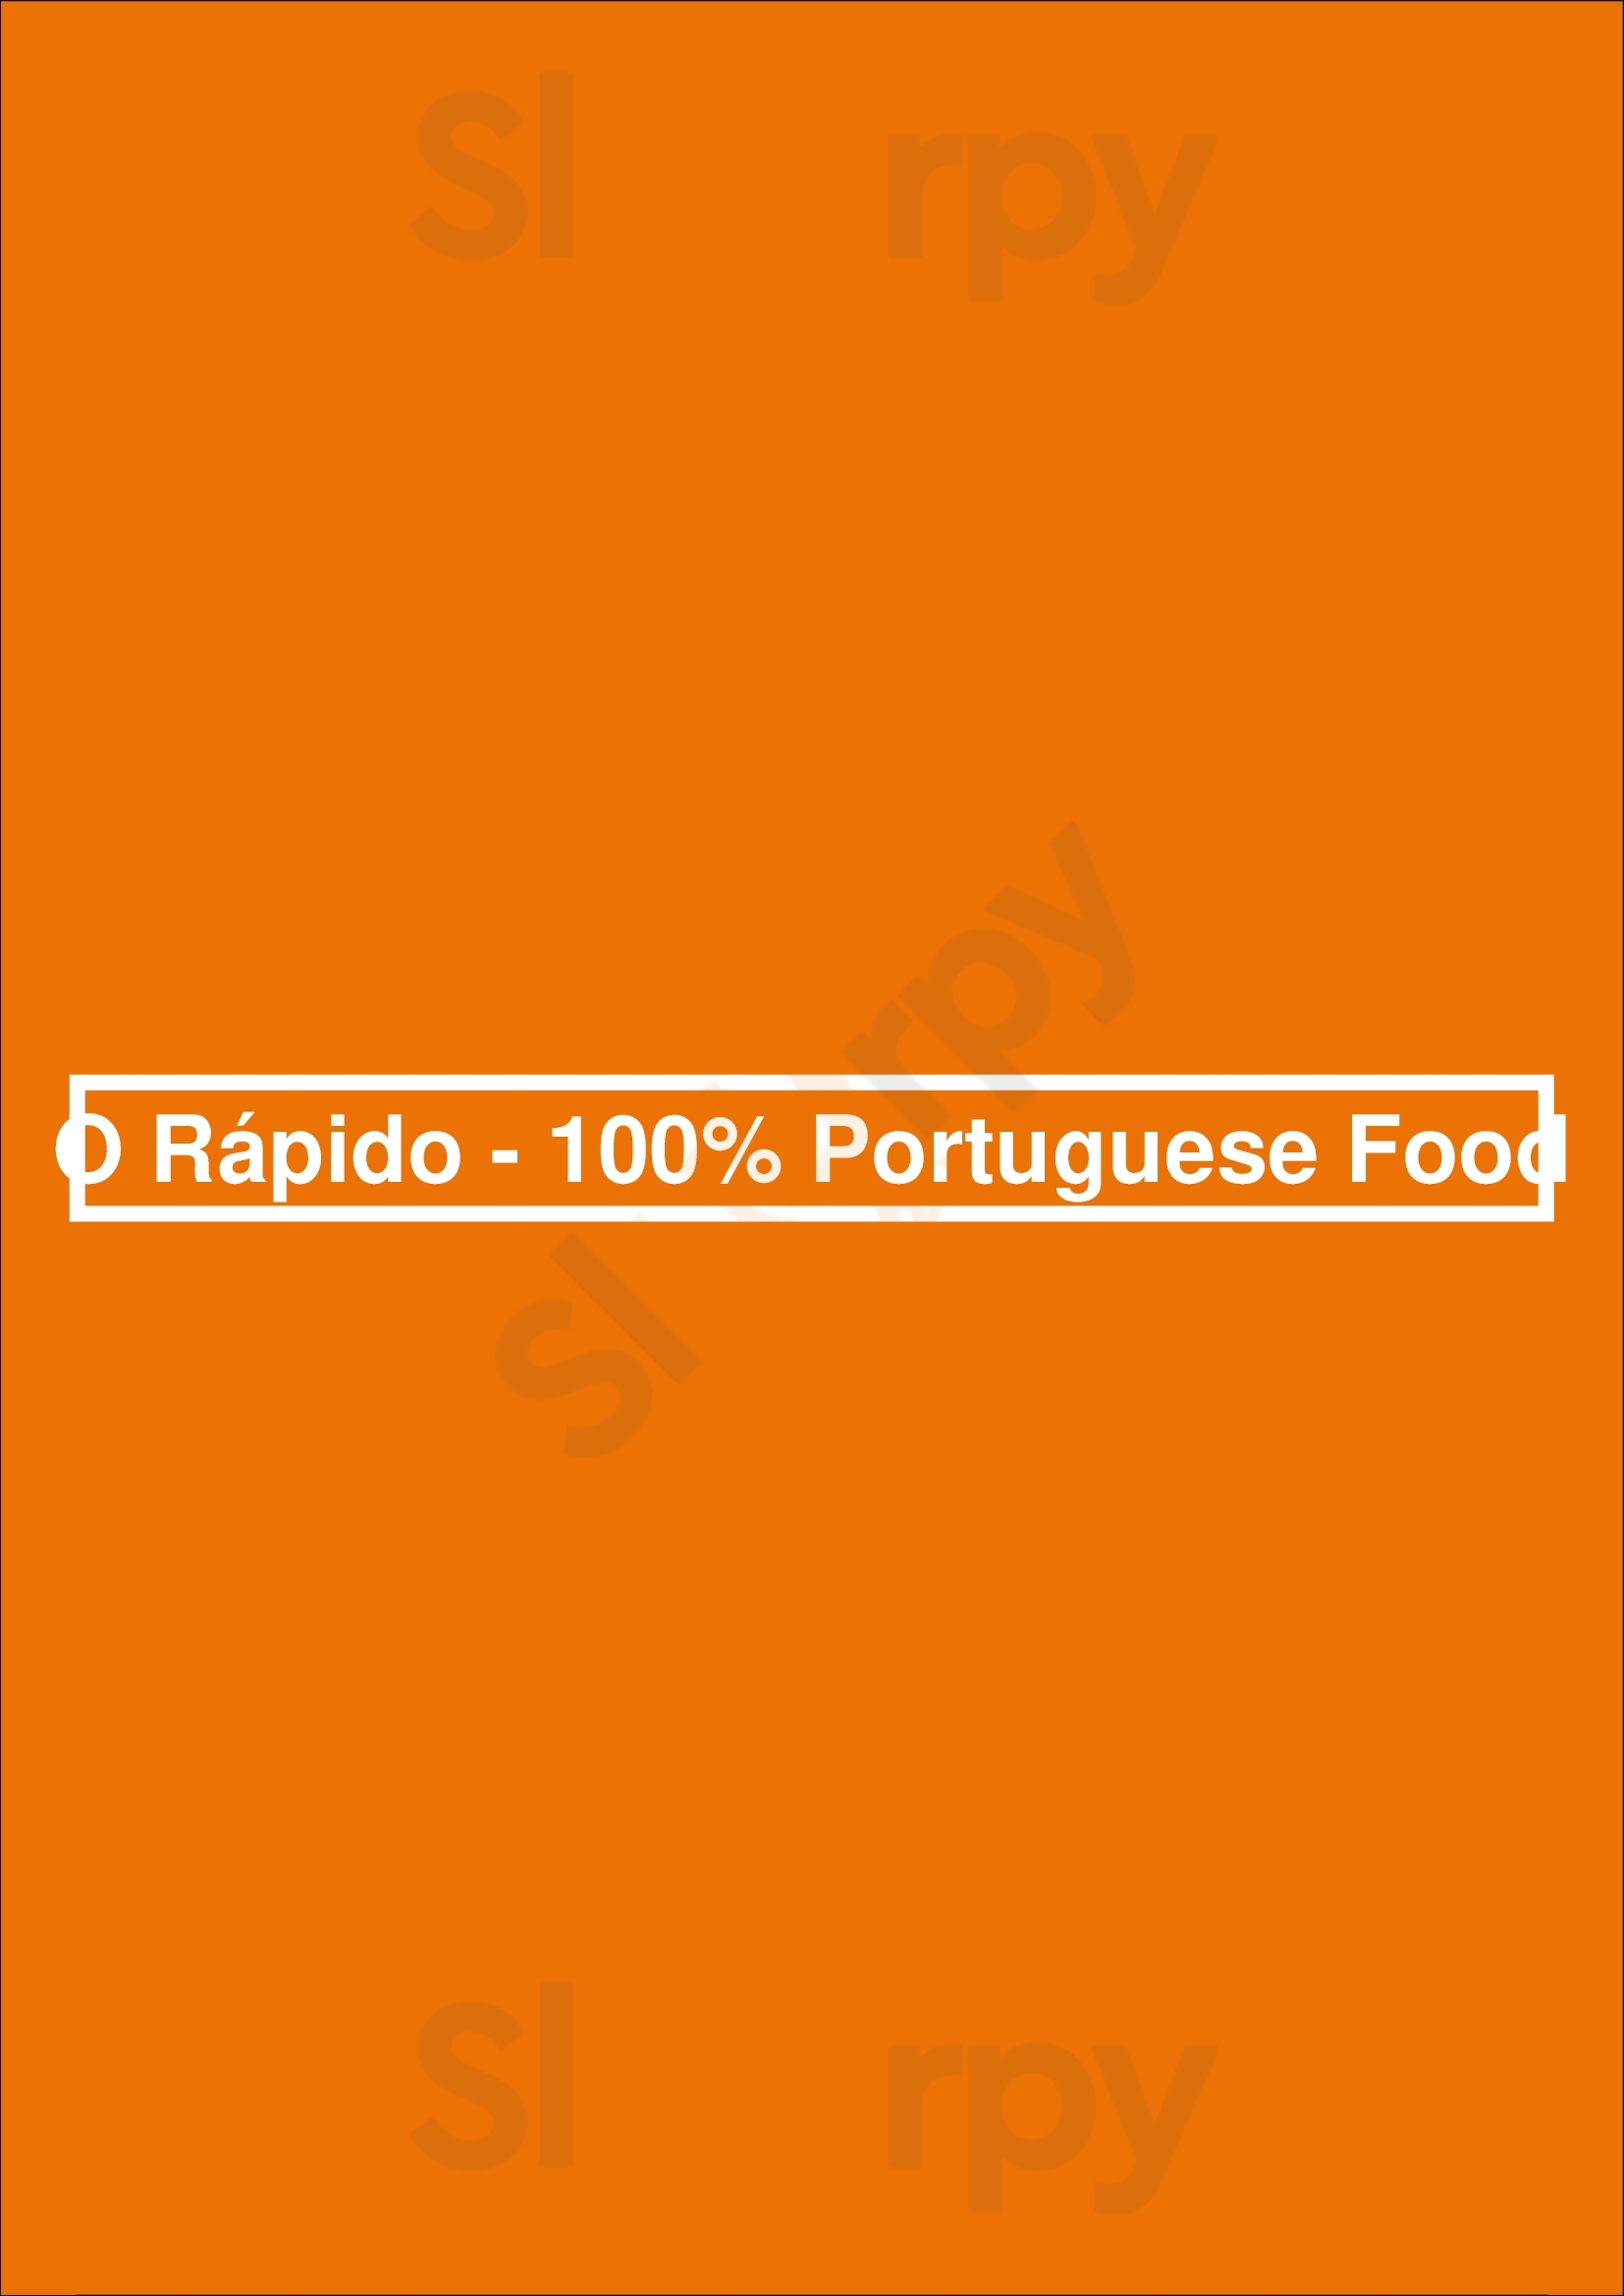 O Rápido - 100% Portuguese Food Porto Menu - 1